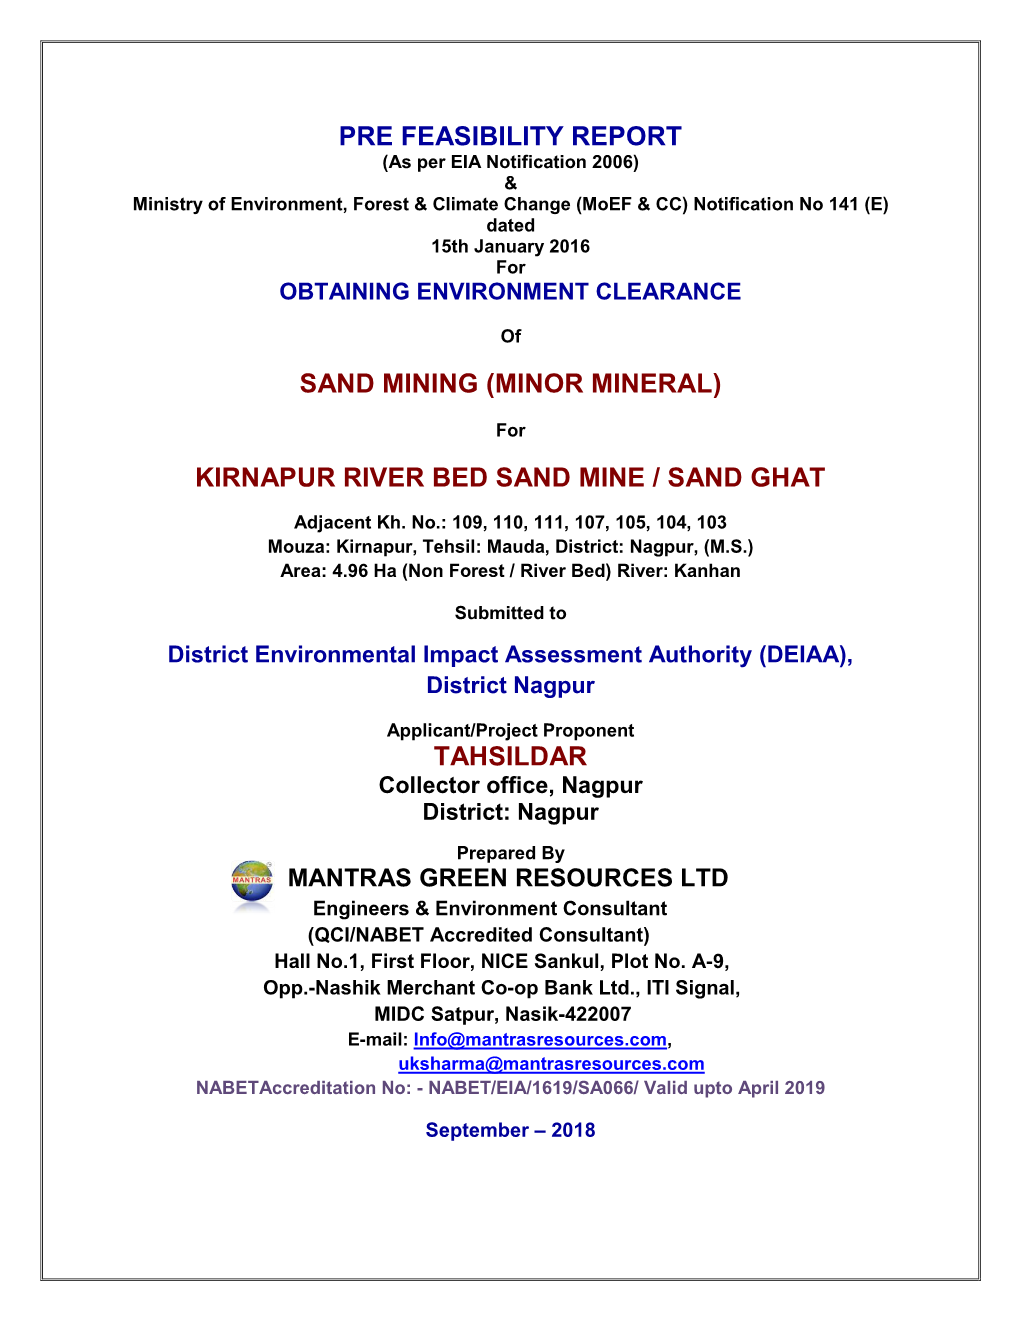 Kirnapur River Bed Sand Mine / Sand Ghat